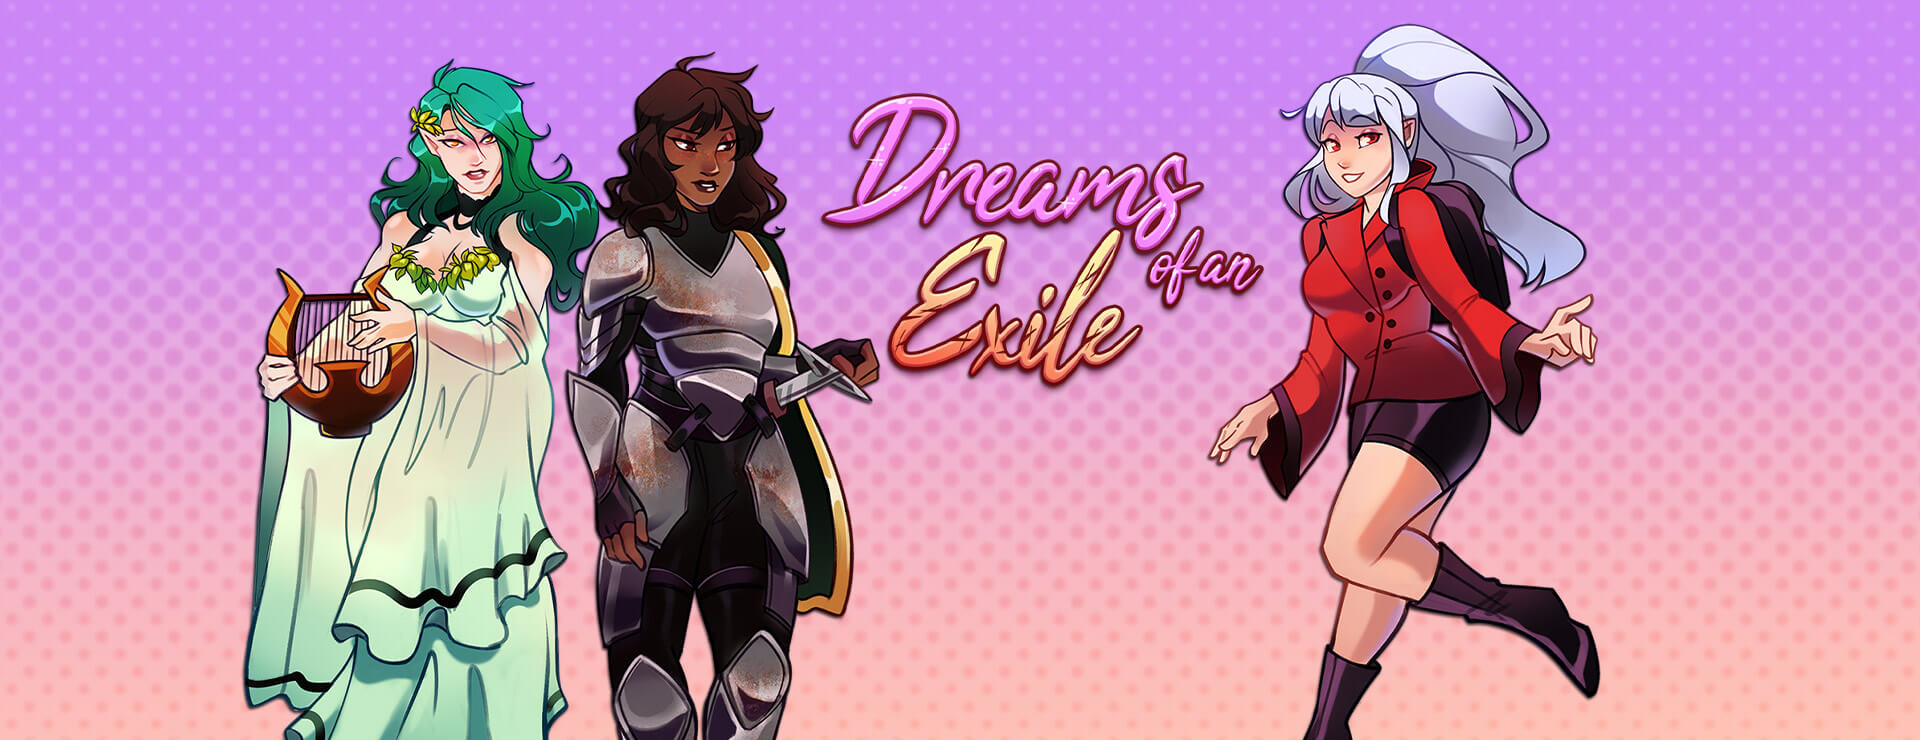 Dreams of an Exile - ビジュアルノベル ゲーム